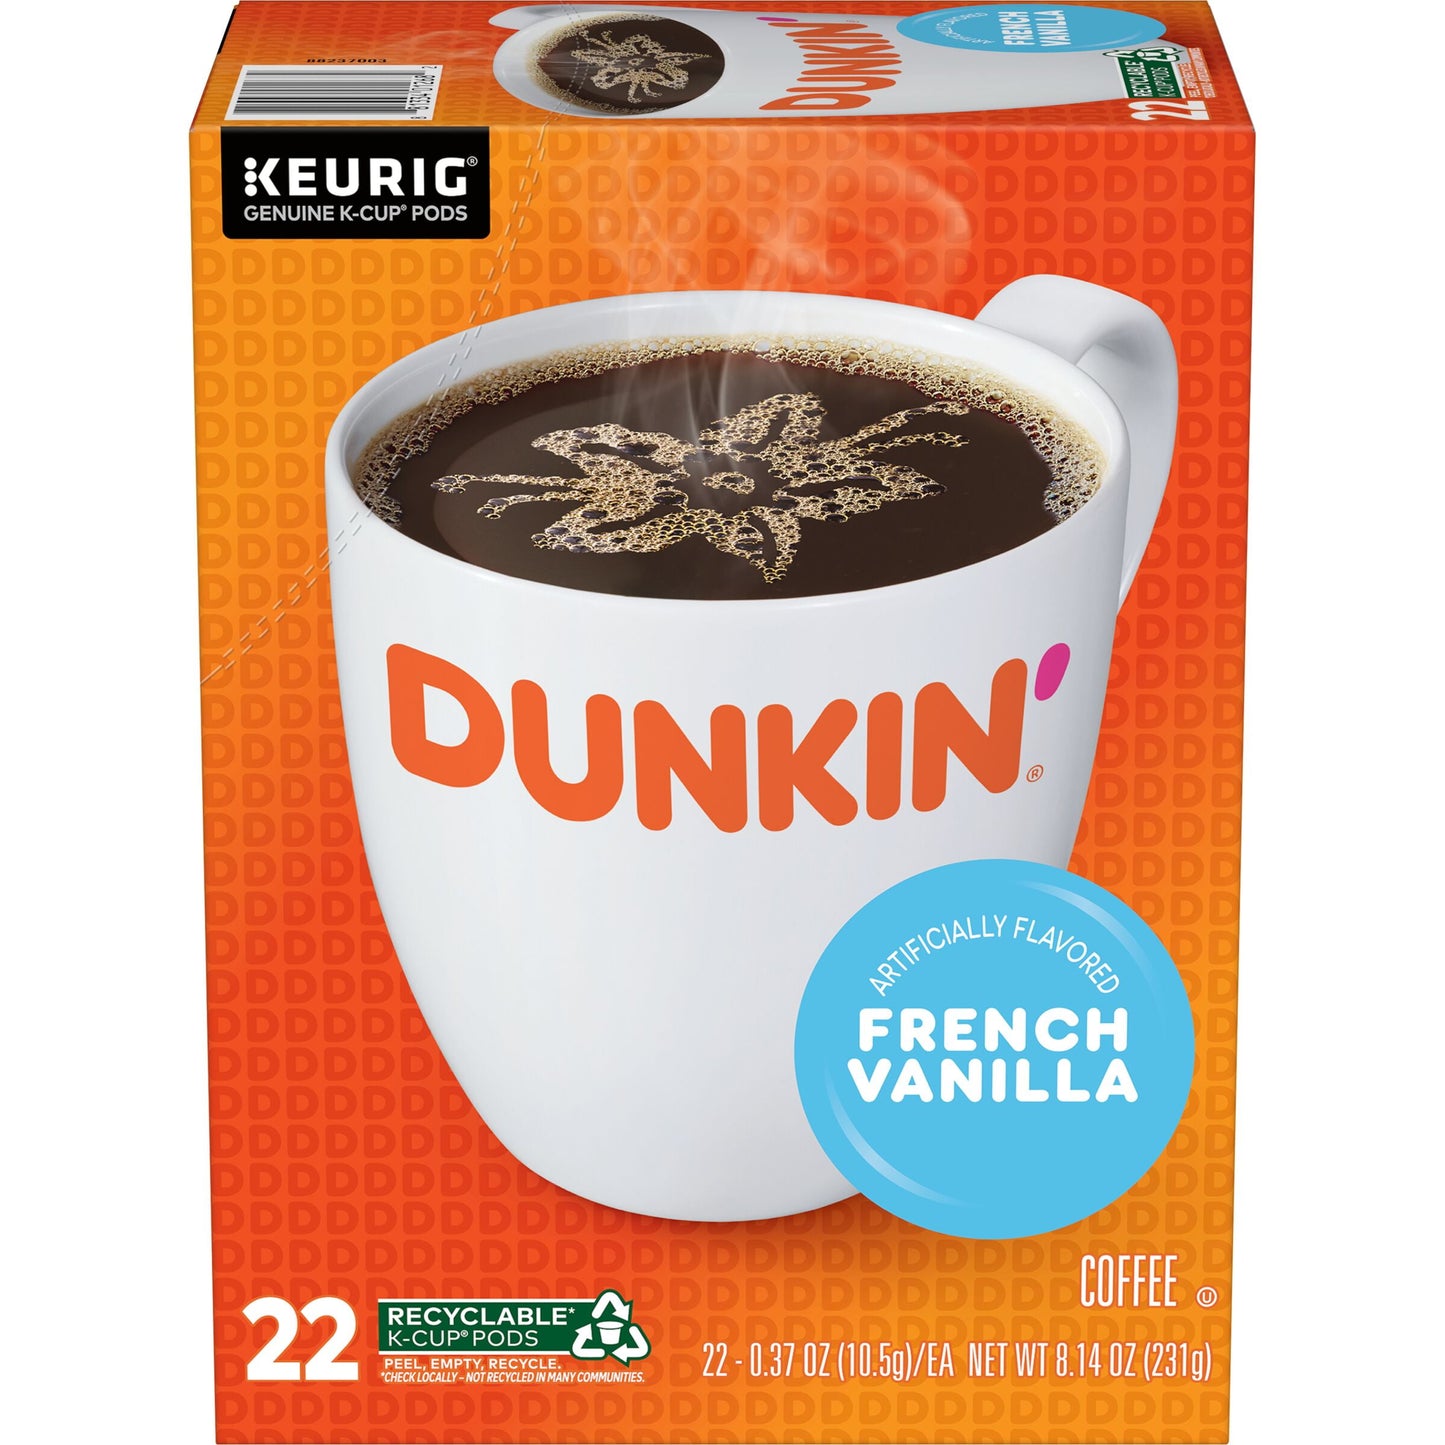 Dunkin' Original Blend Coffee, Medium Roast, K-Cup Pods, 22 Count Box